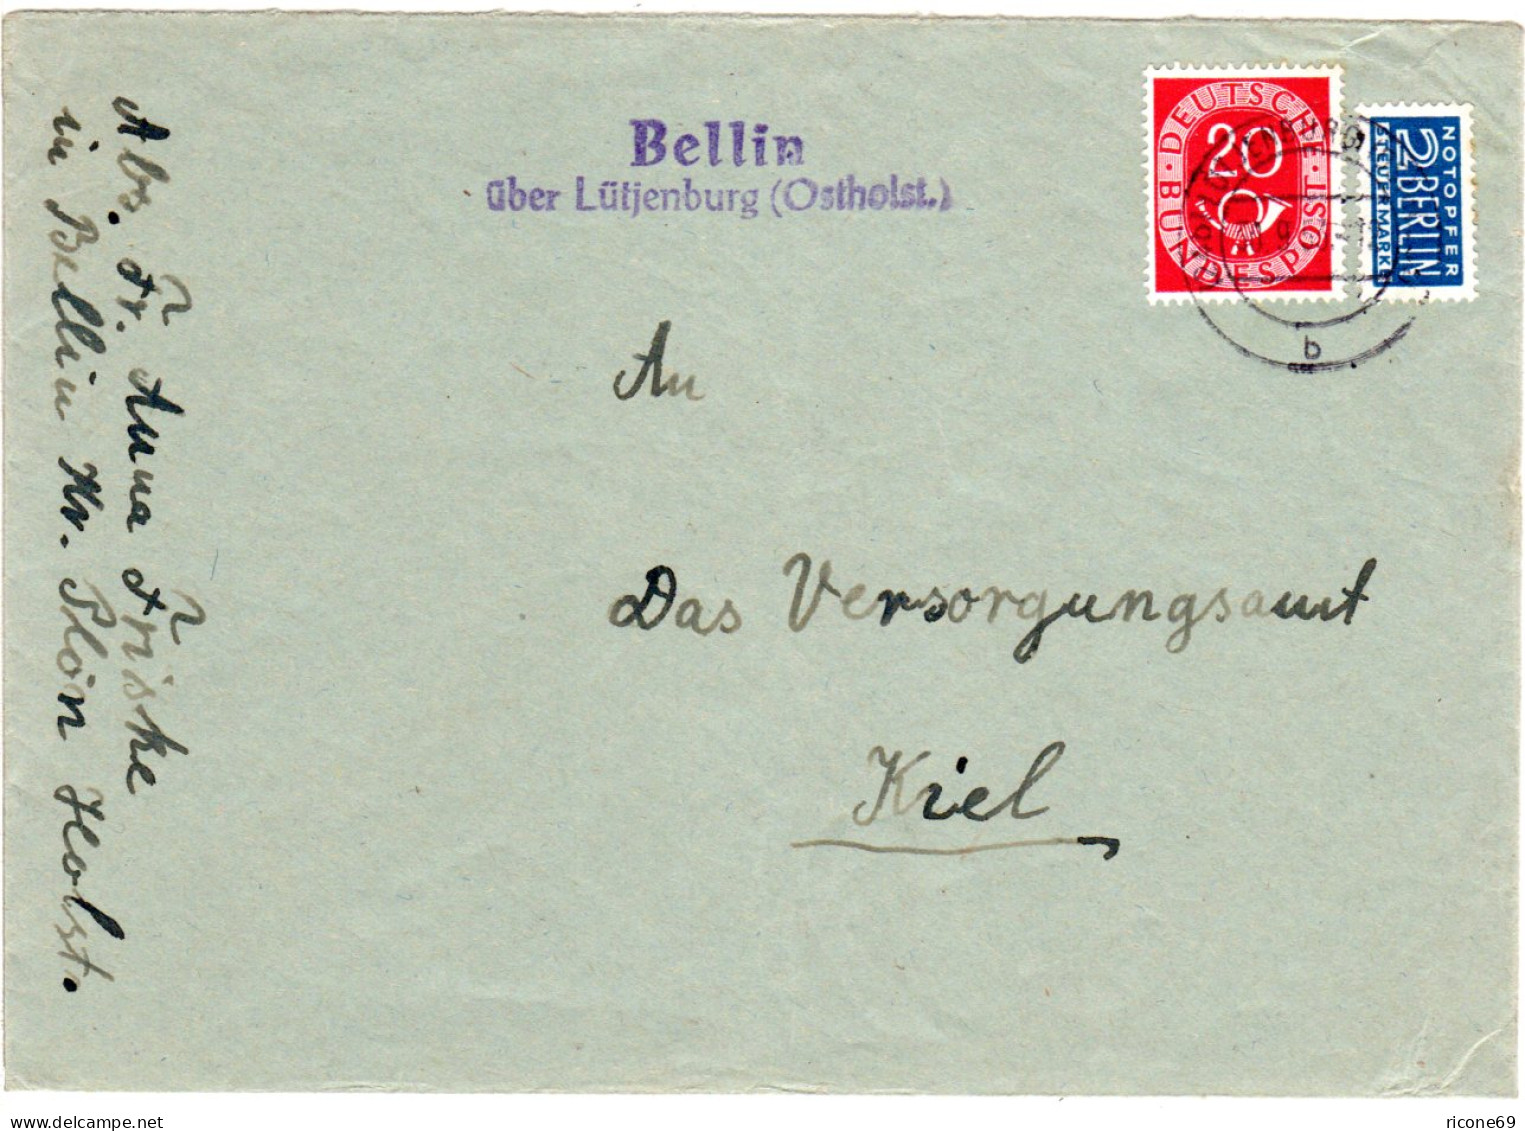 BRD 1953, Landpost Stpl. BELLIN über Lütjenburg Auf Brief M. 20 Pf. Posthorn. - Colecciones